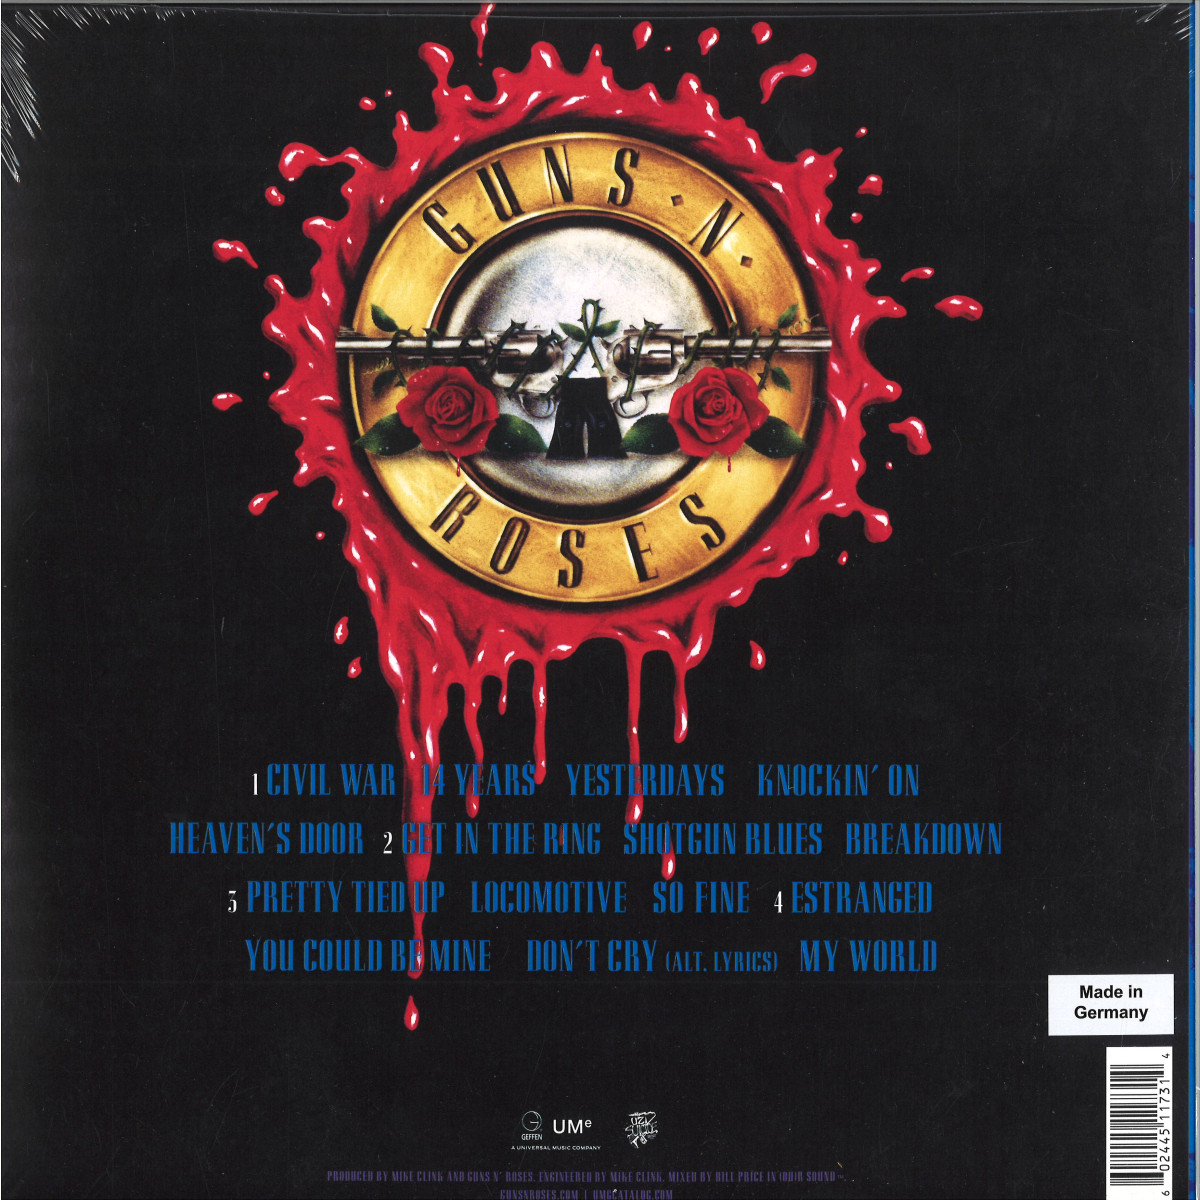 Guns N' Roses - Use Your Illusion II LP (2x12") / Guns N Roses P&D  0602445117314 - Vinyl